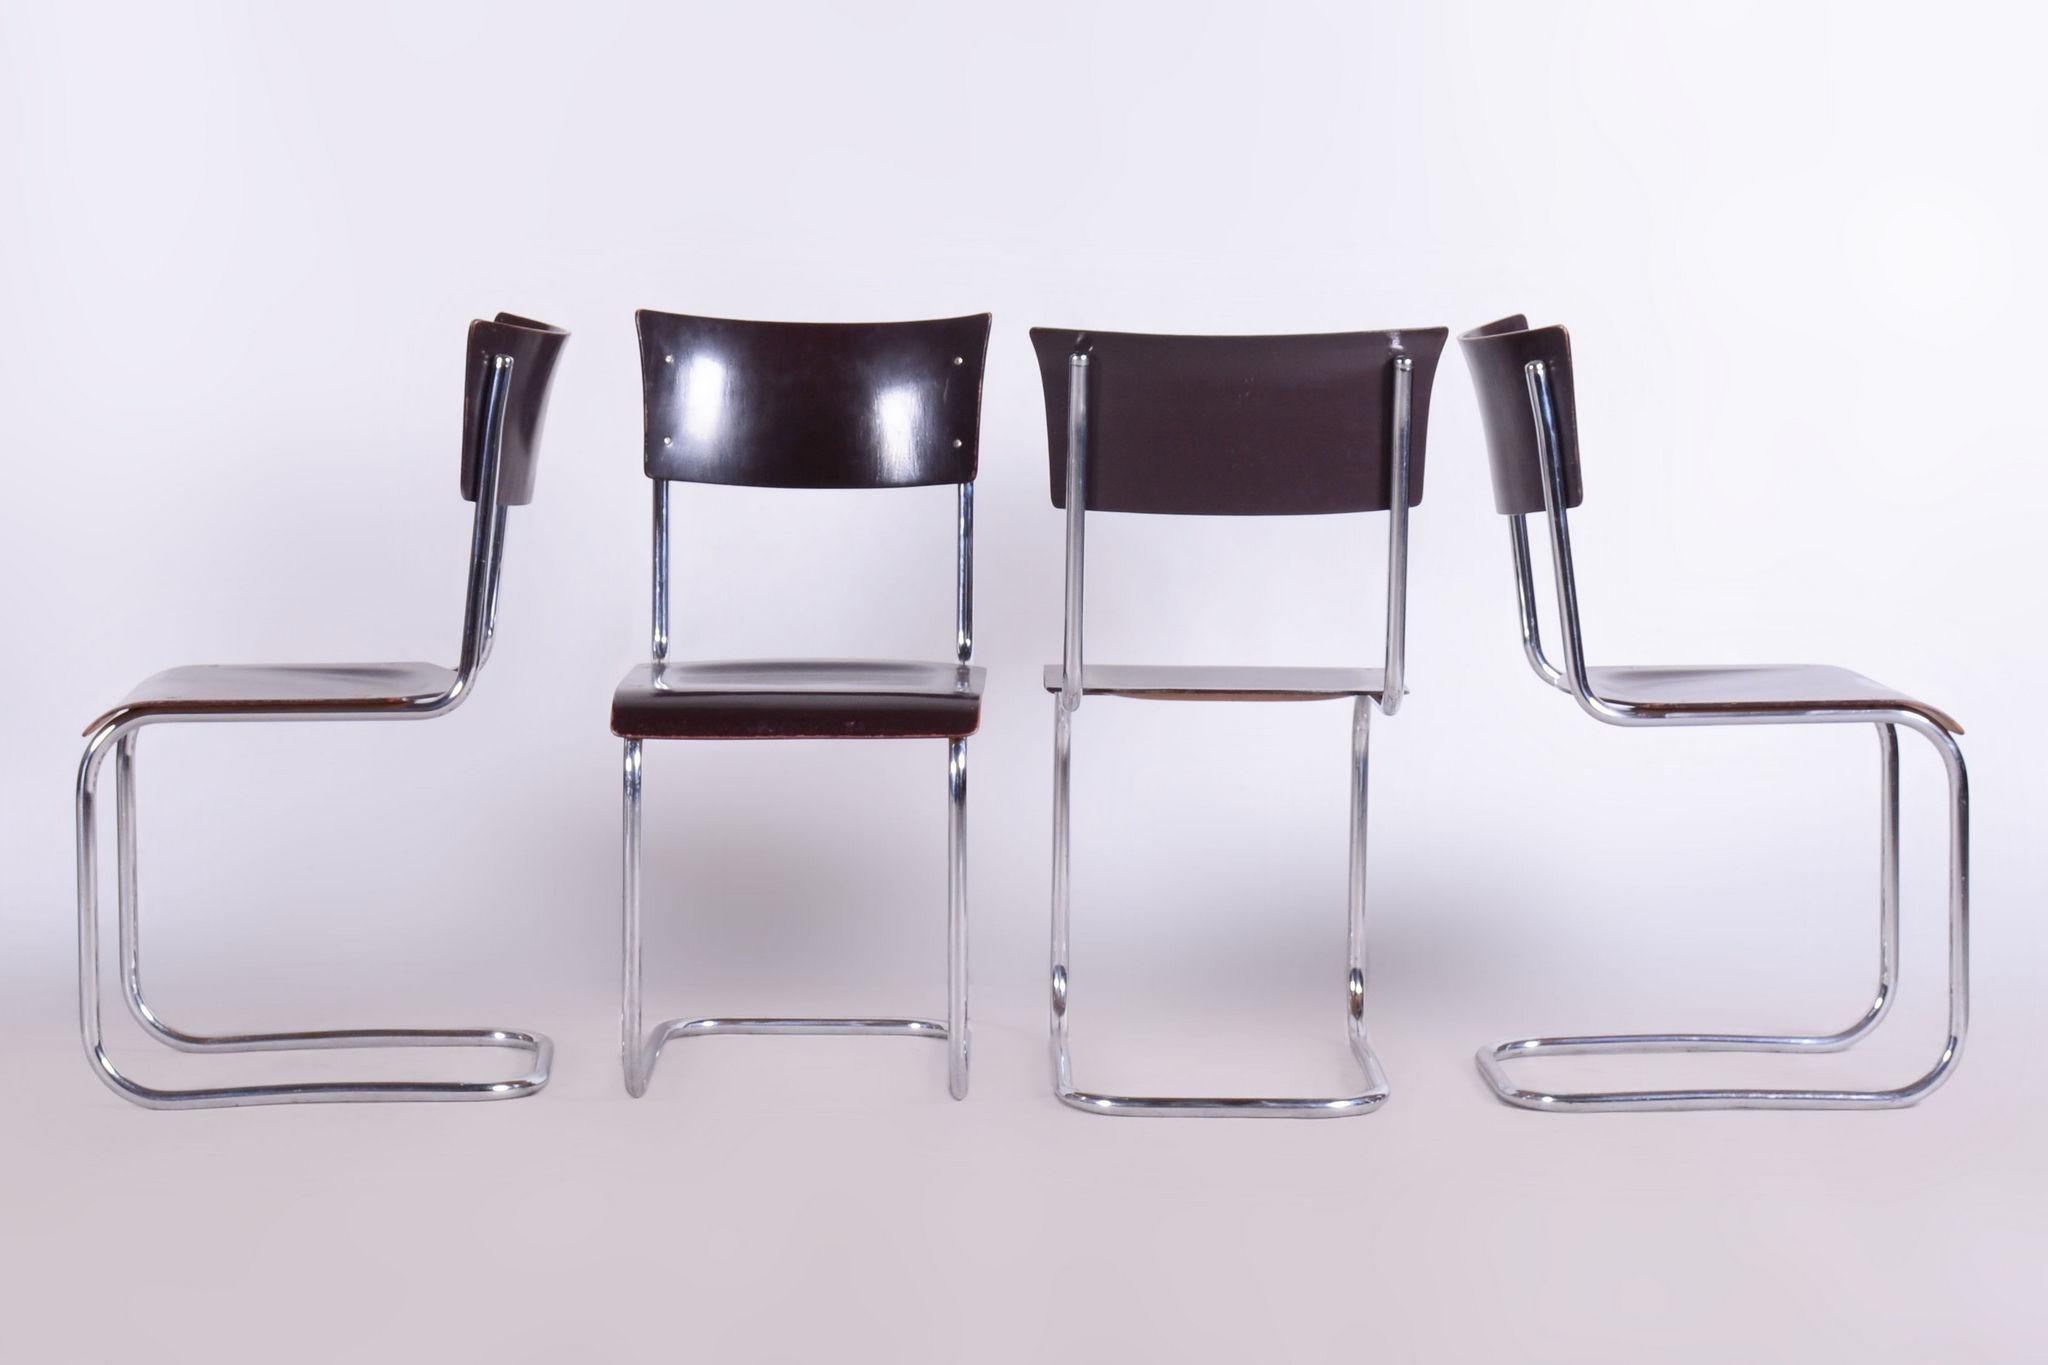 Set of 4 Restored Bauhaus Chairs, Mart Stam, Robert Slezak, Czechia, 1930s For Sale 3